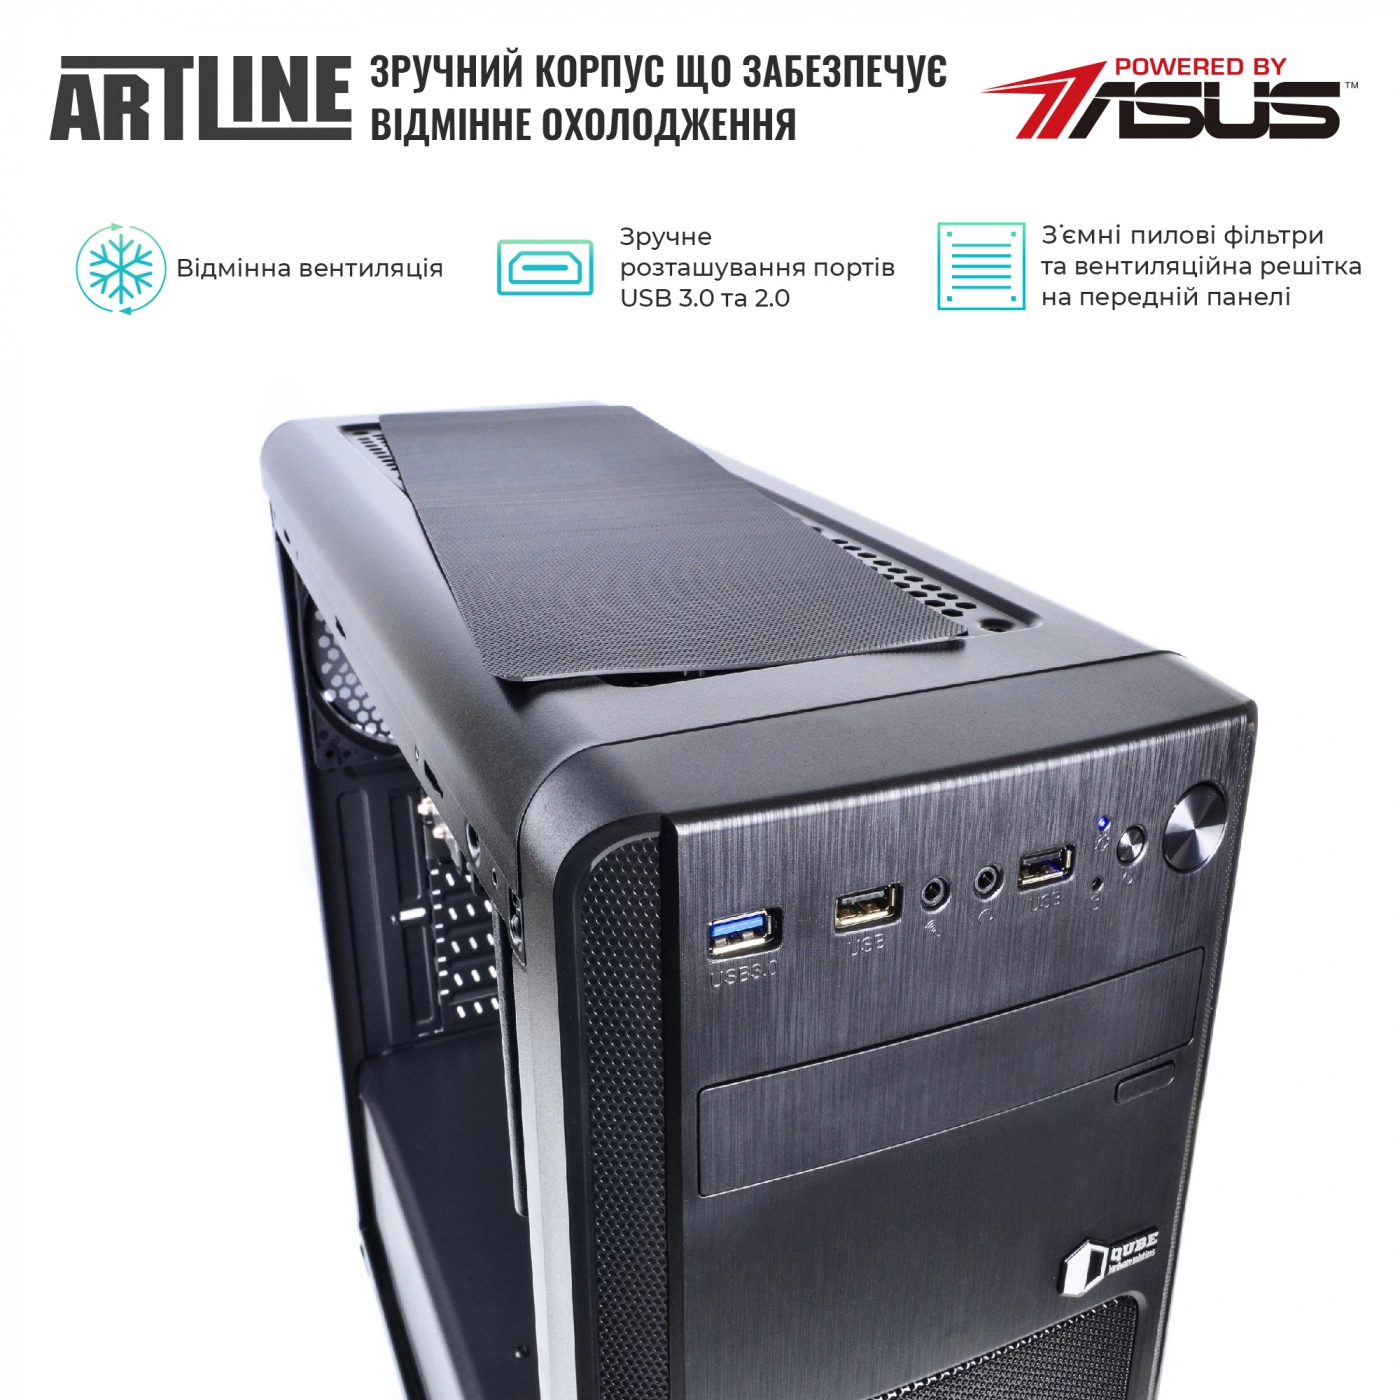 Купити Сервер ARTLINE Business T15v16 - фото 2